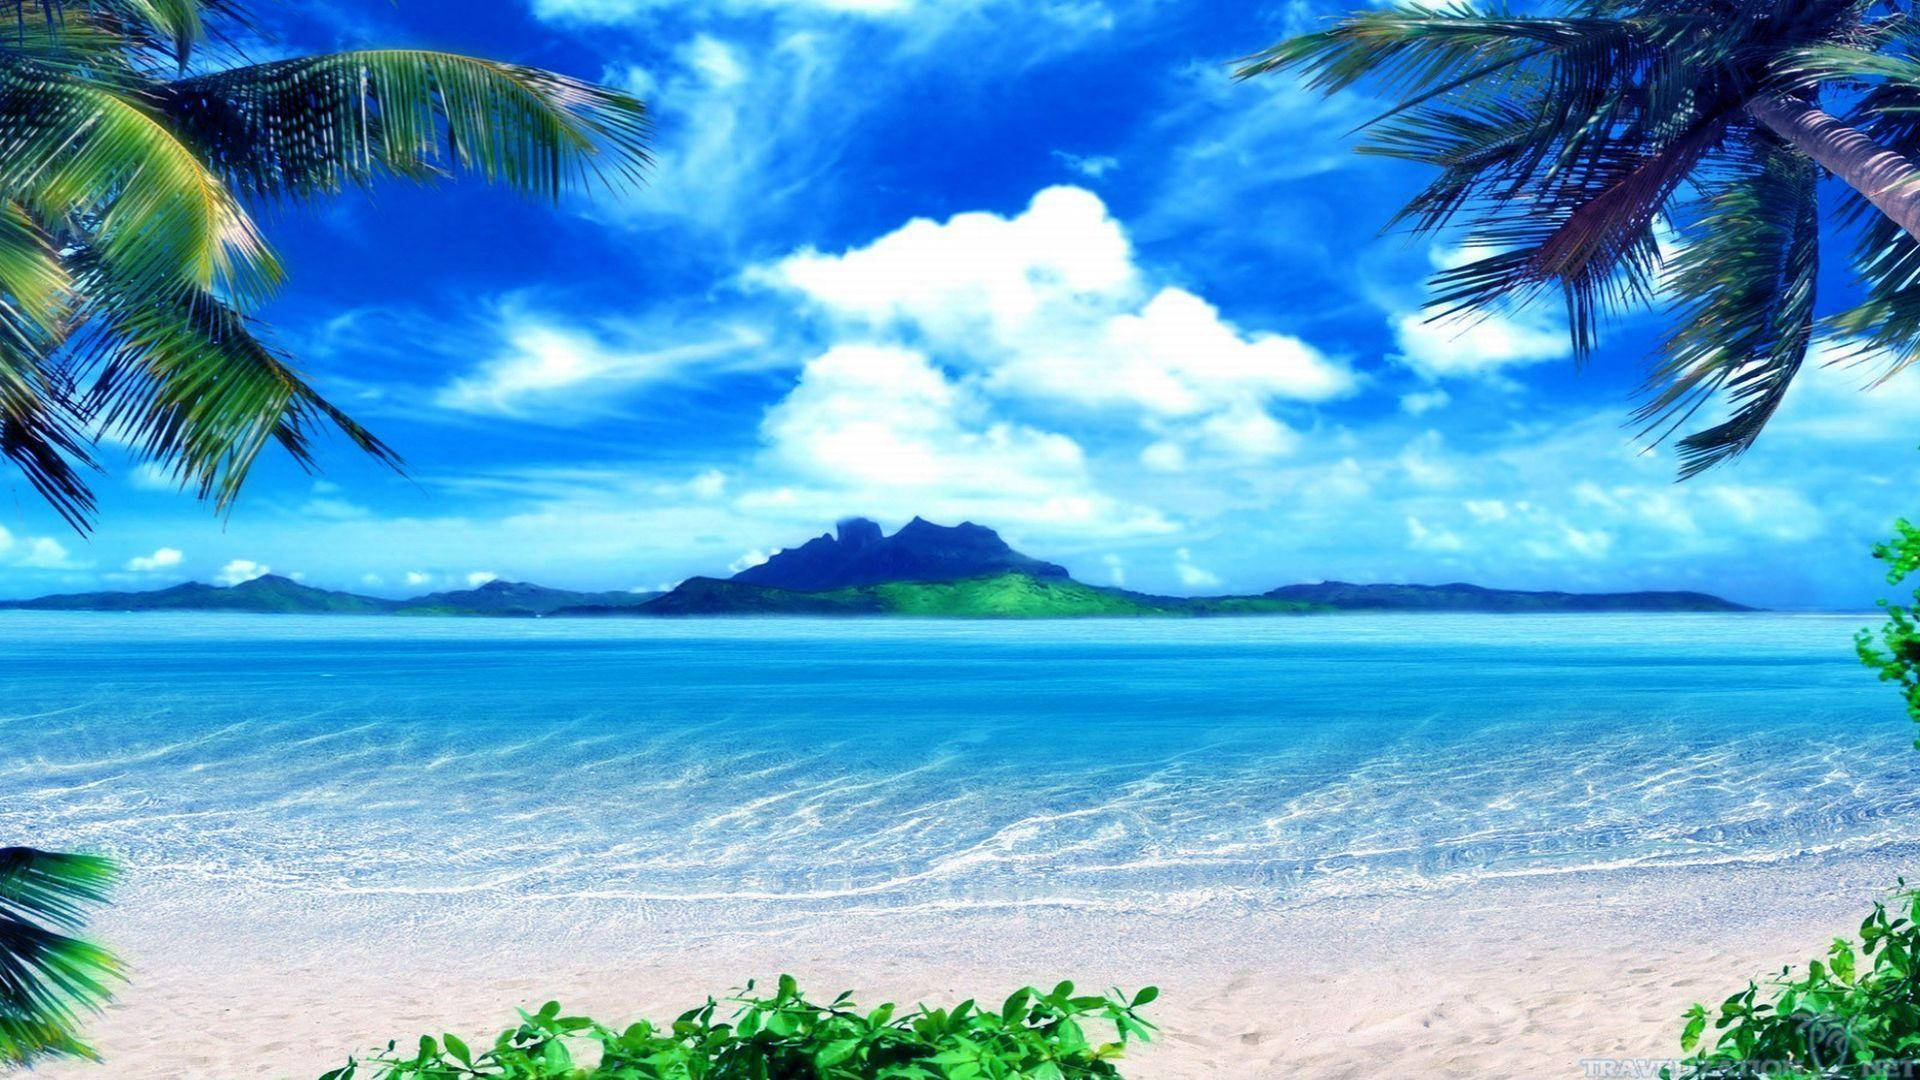 Bahamasblauer Himmel Und Meer Wallpaper